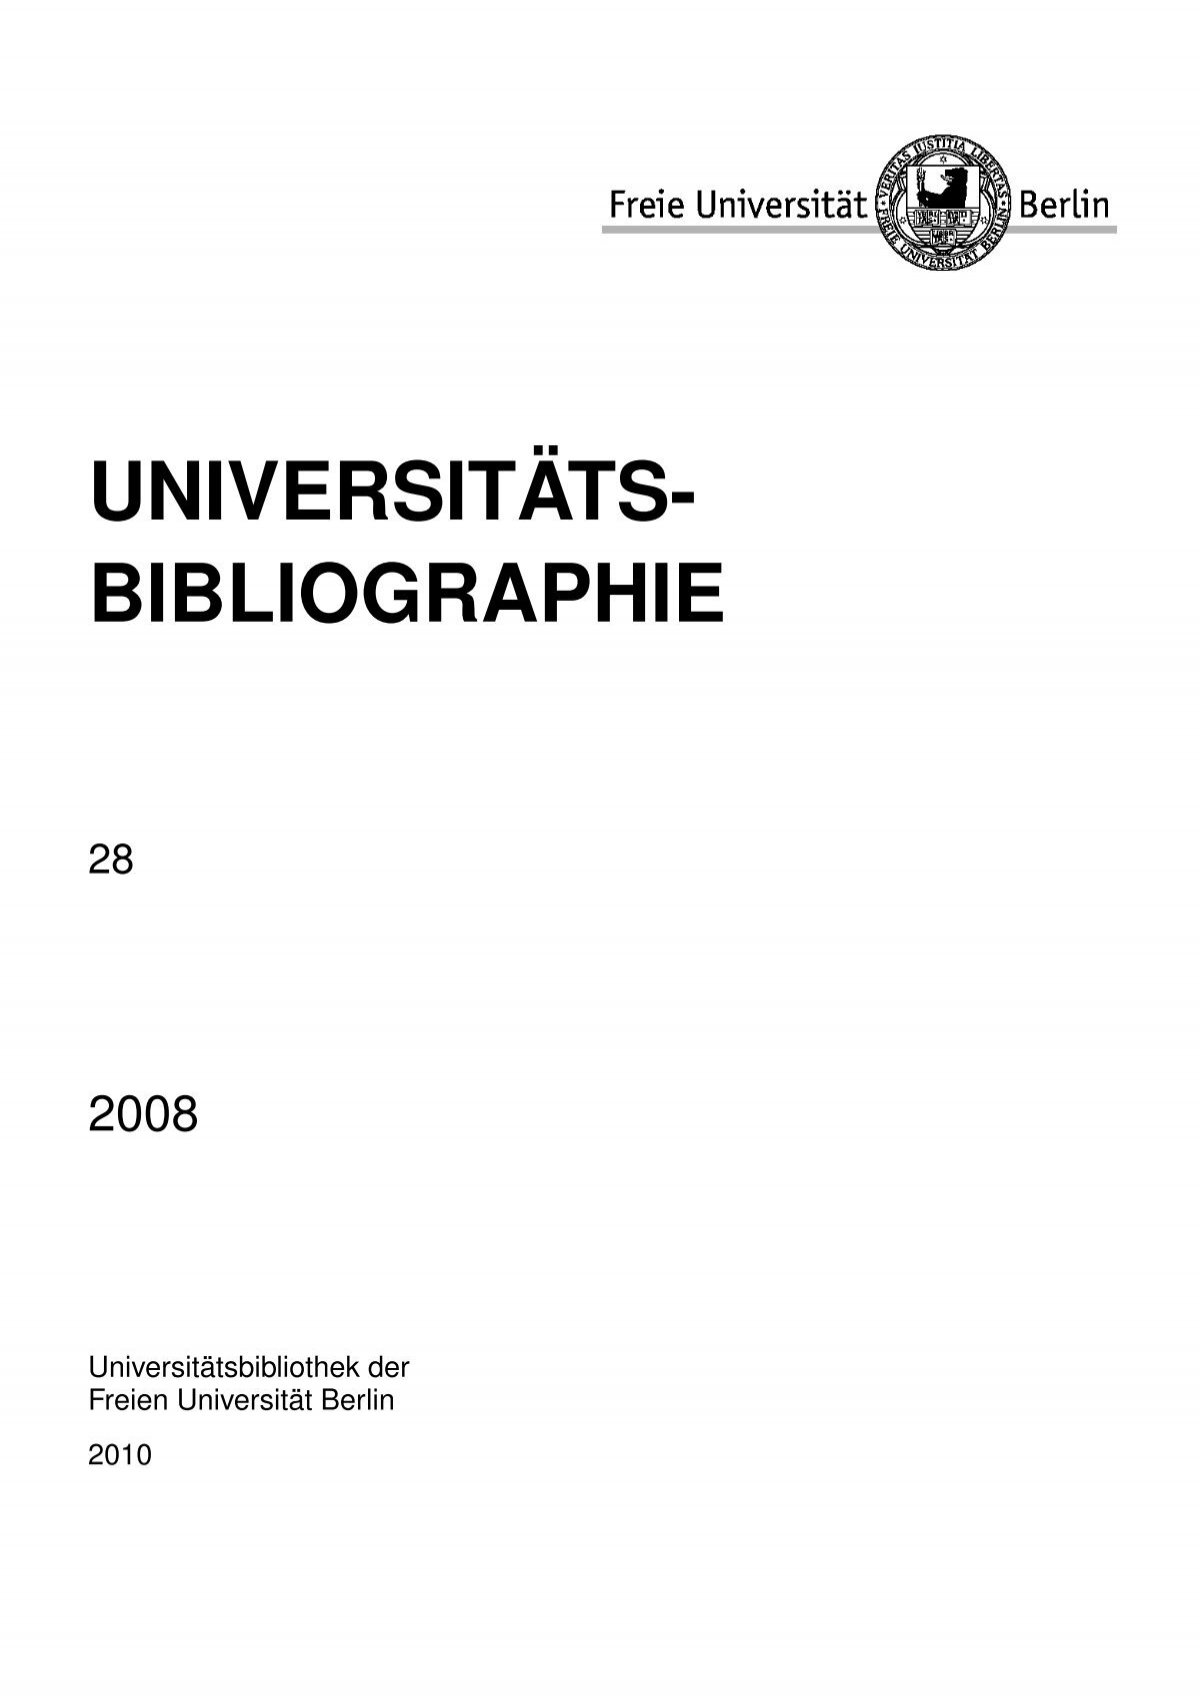 Bibliographie Freie Universitat Berlin